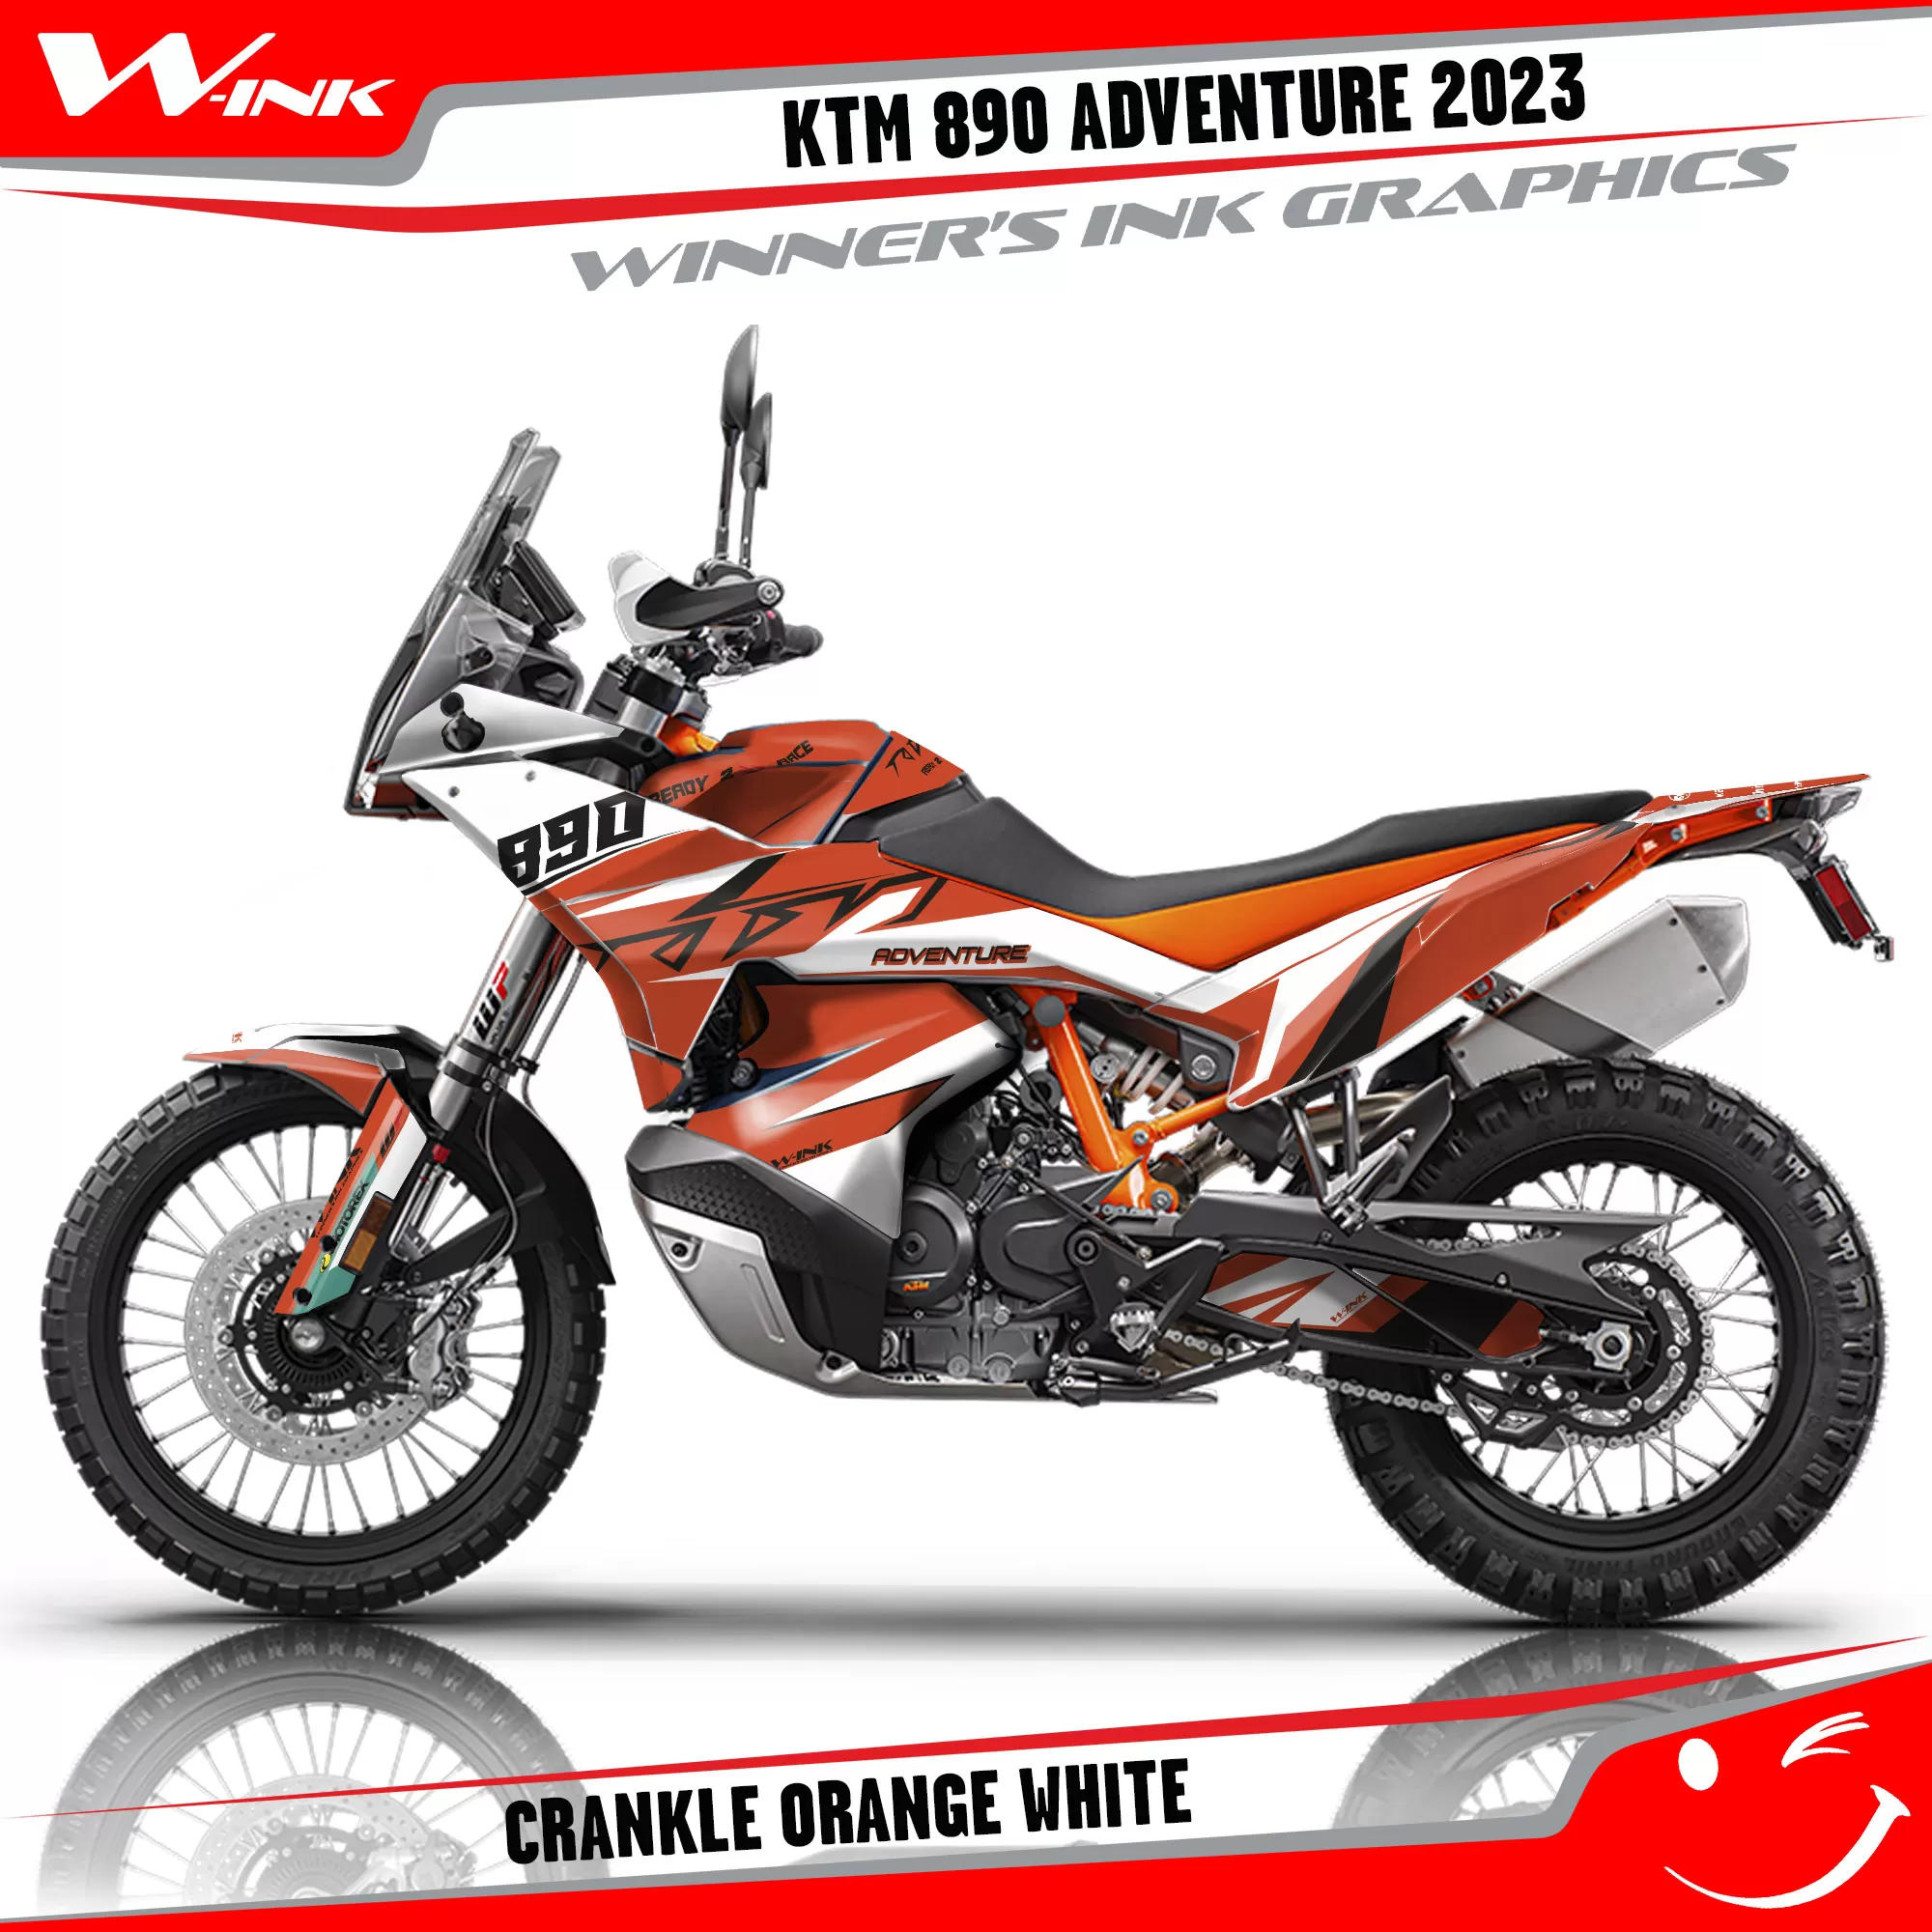 Adventure-890-2023-graphics-kit-and-decals-with-design-Crankle-Orange-White